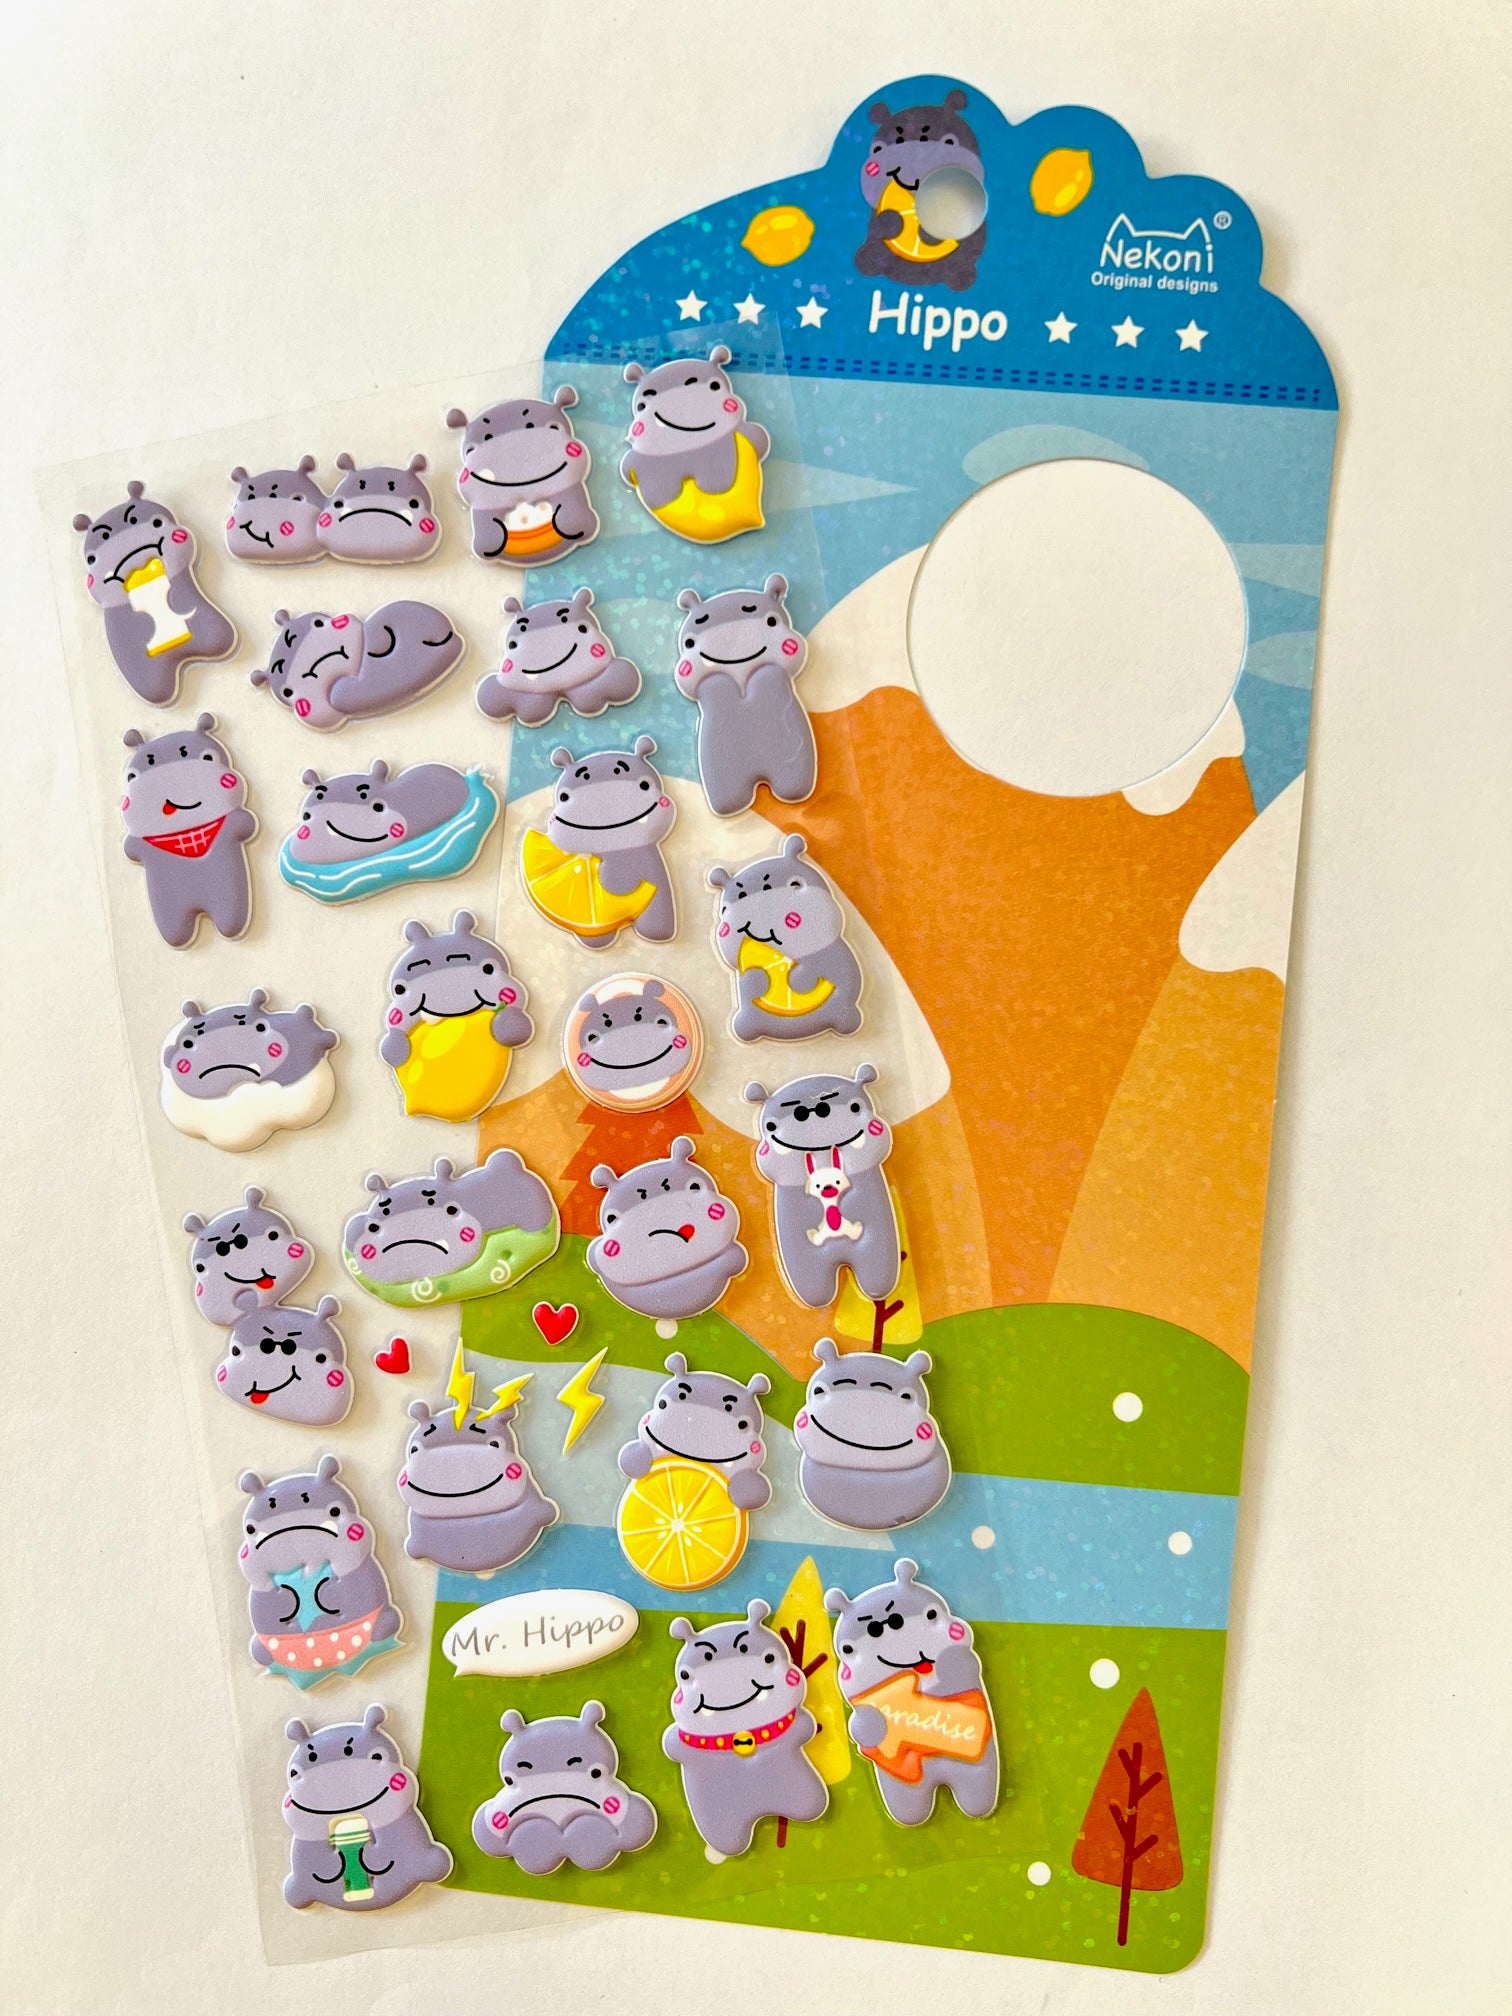 Packaged Fuzzy Stickers - FZ1403 - Hippo sticker<BR>(FREE STANDARD